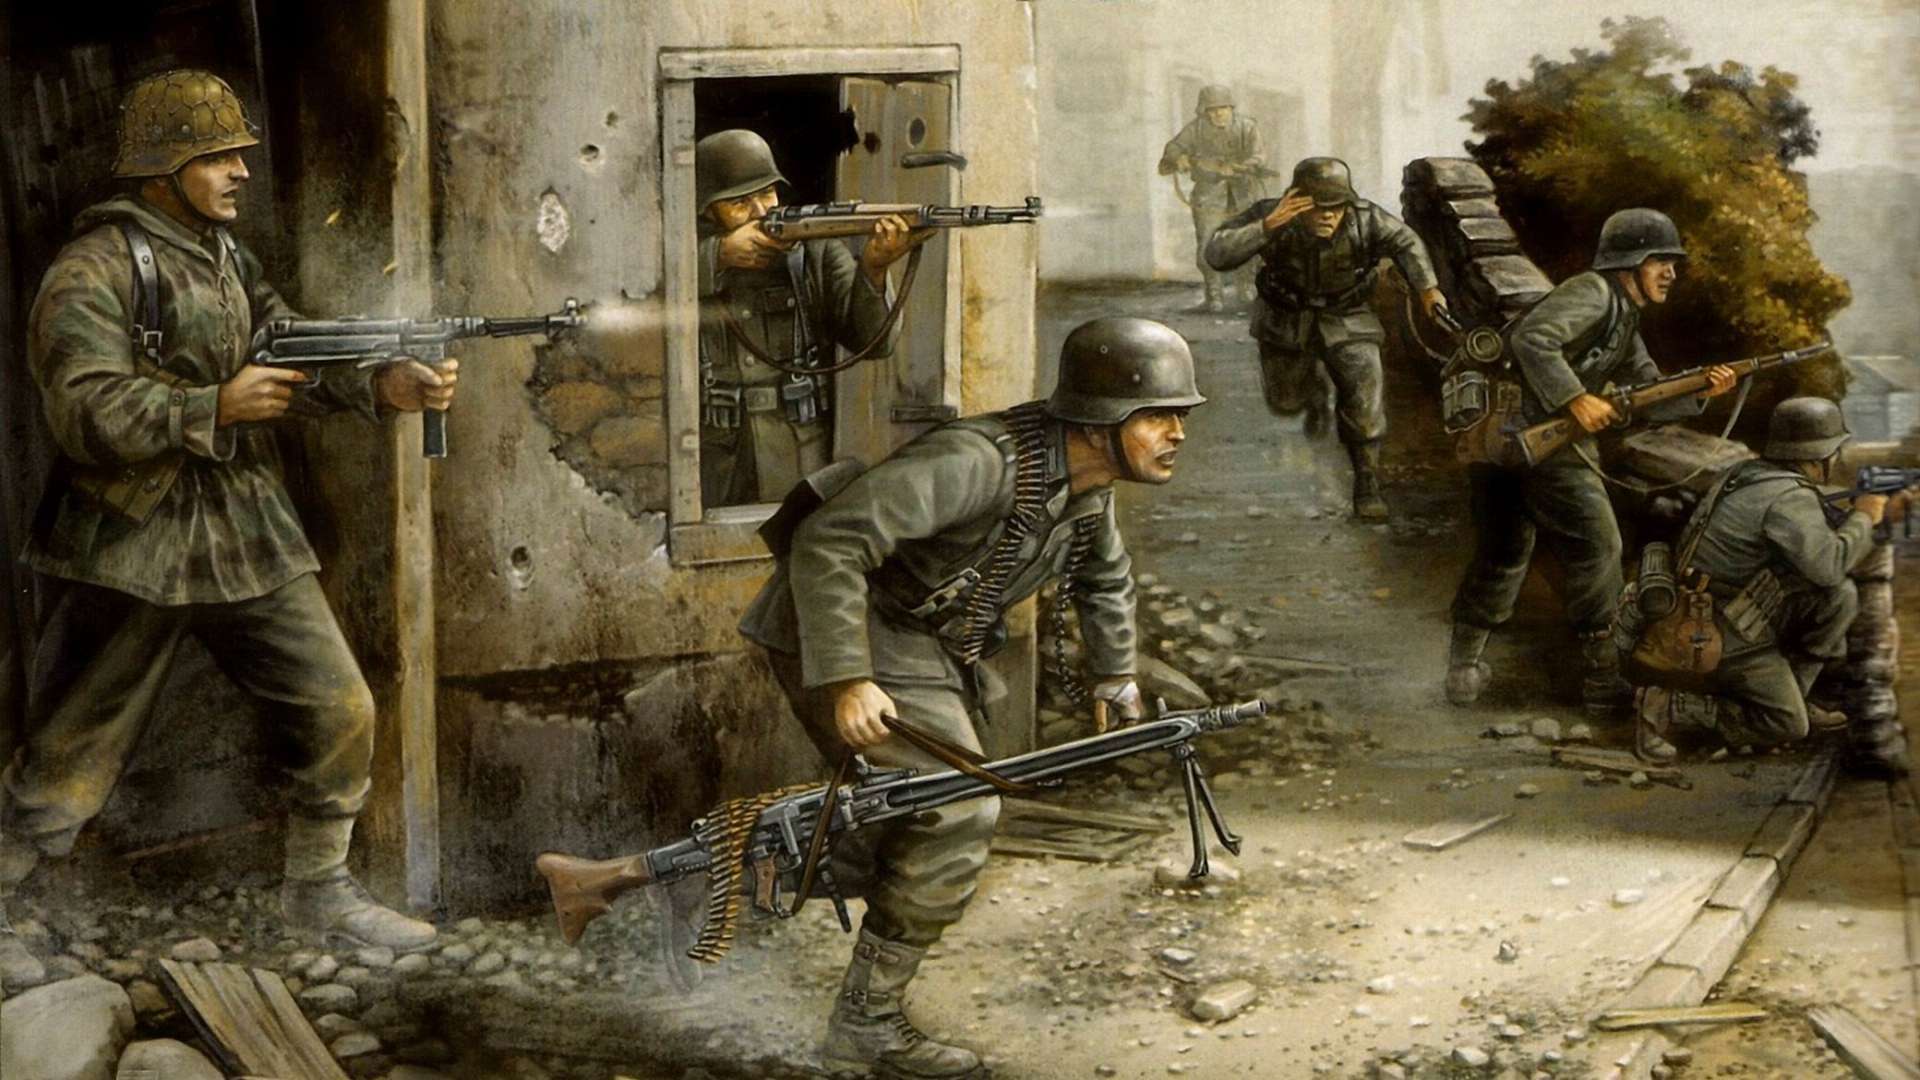 Wallpaper Flames Of War Germans Hd Wallpaper Upload at October 23